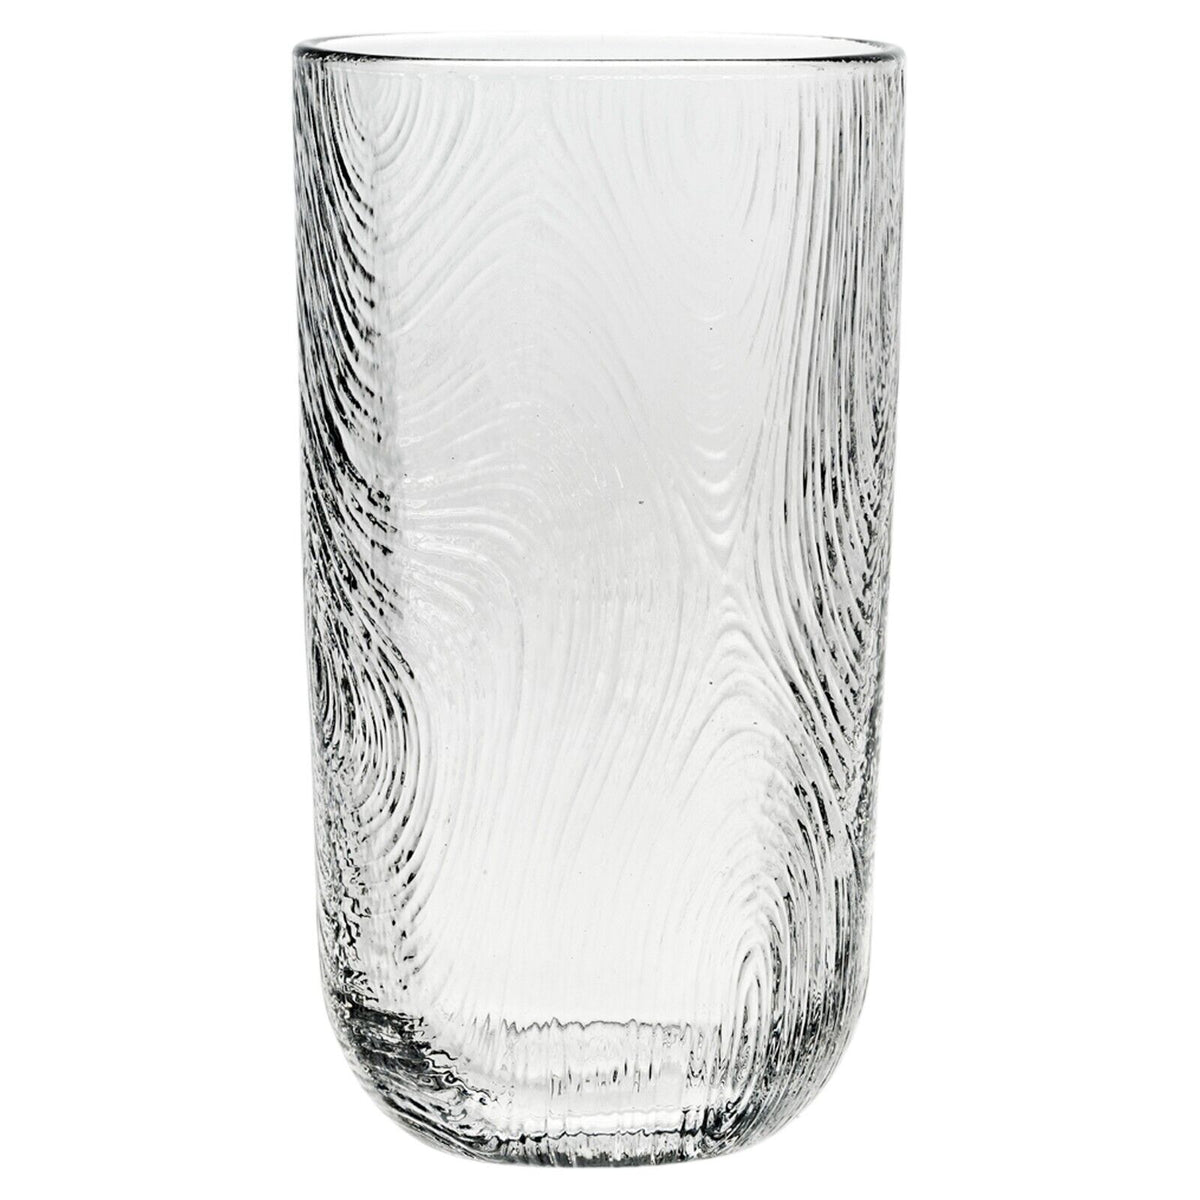 Pasabahce Linden Highball Glass - 350ml (Box of 6)